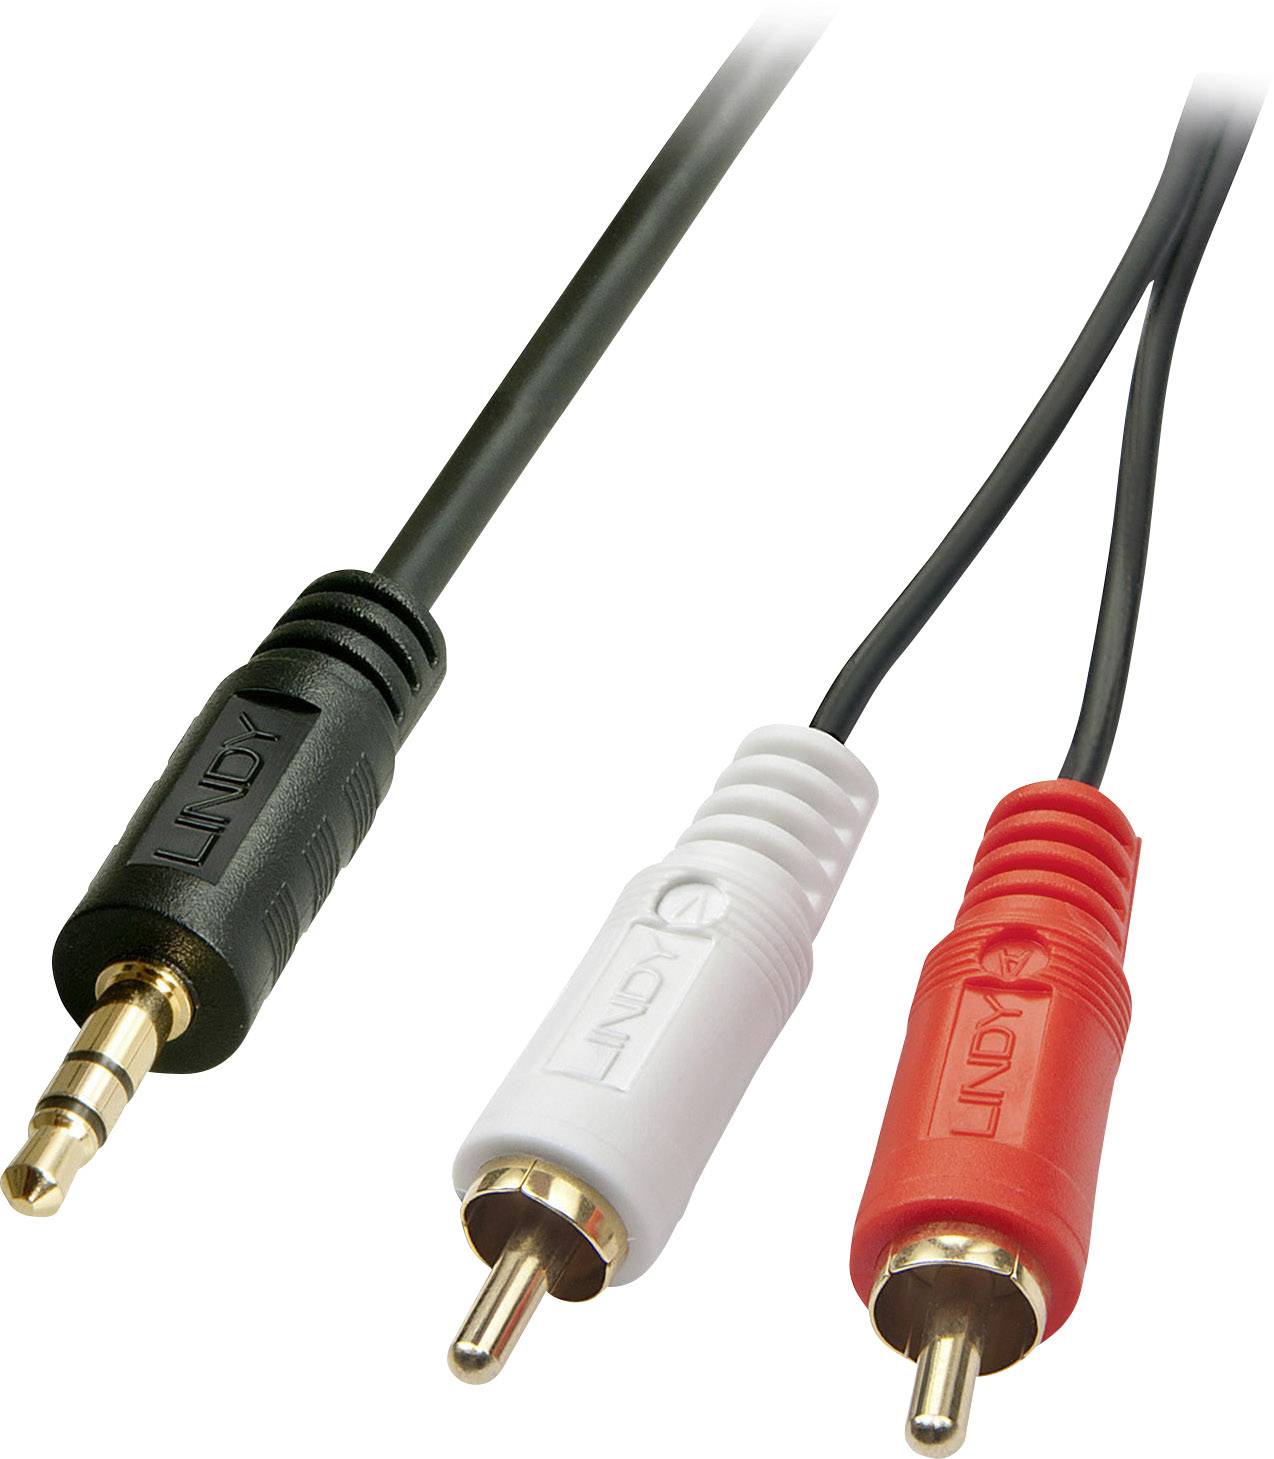 LINDY Audiokabel Stereo RCA 3,5mm/2m  2xRCA/3,5mm m/m, vergoldet